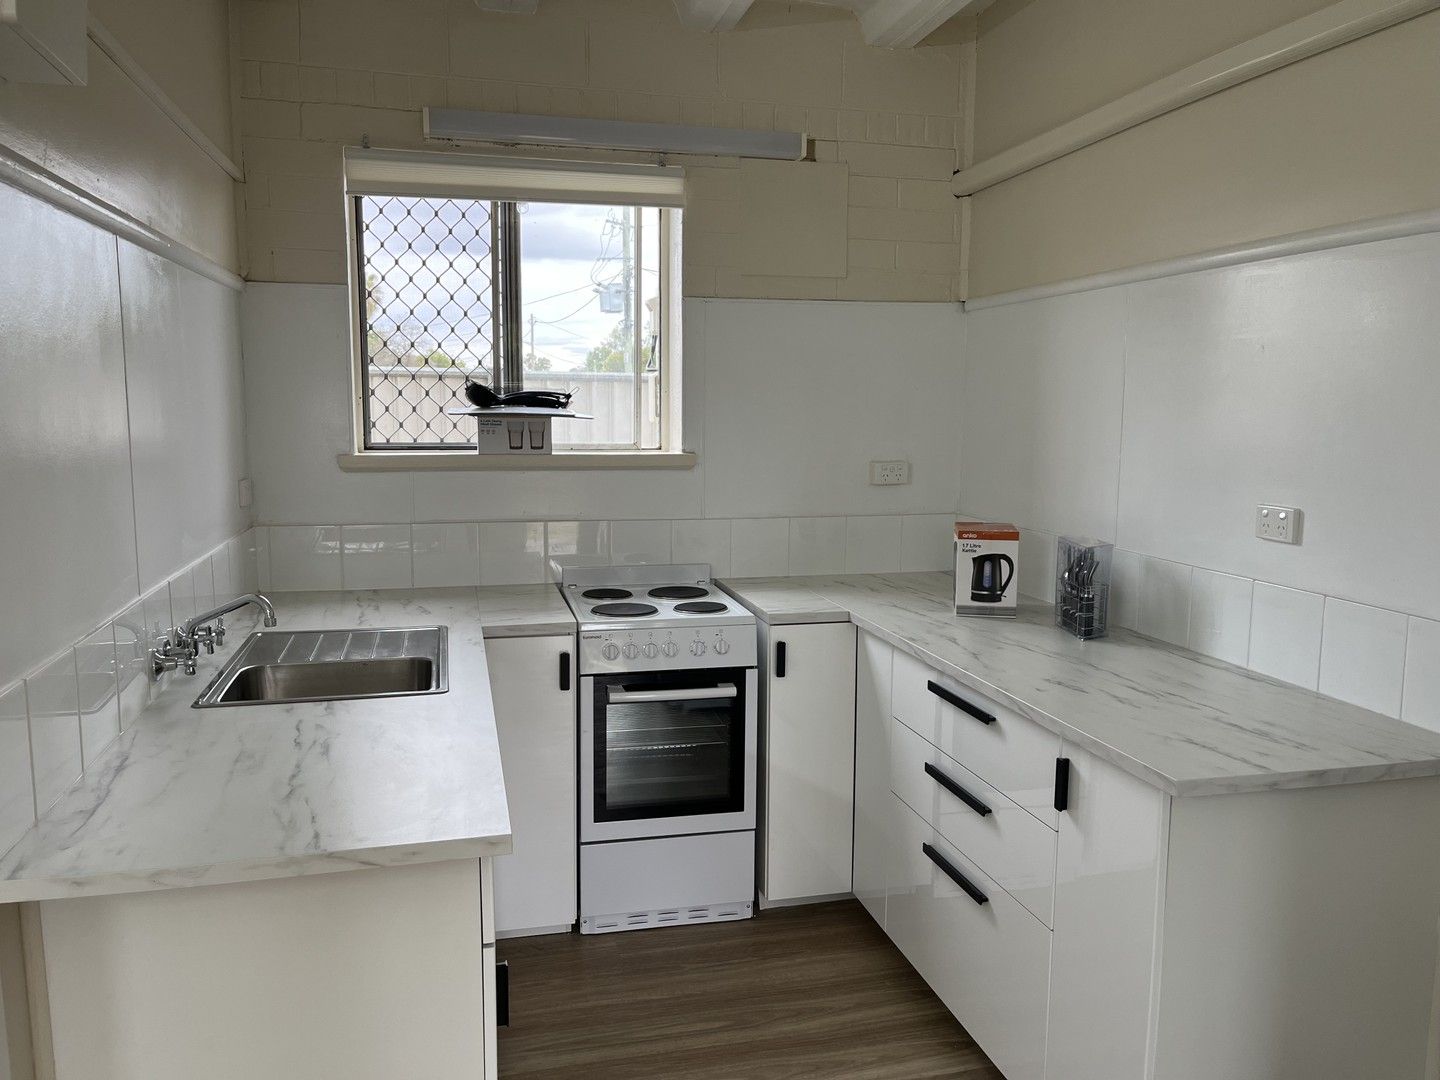 2 bedrooms Apartment / Unit / Flat in 7/3 May Street NARRABRI NSW, 2390